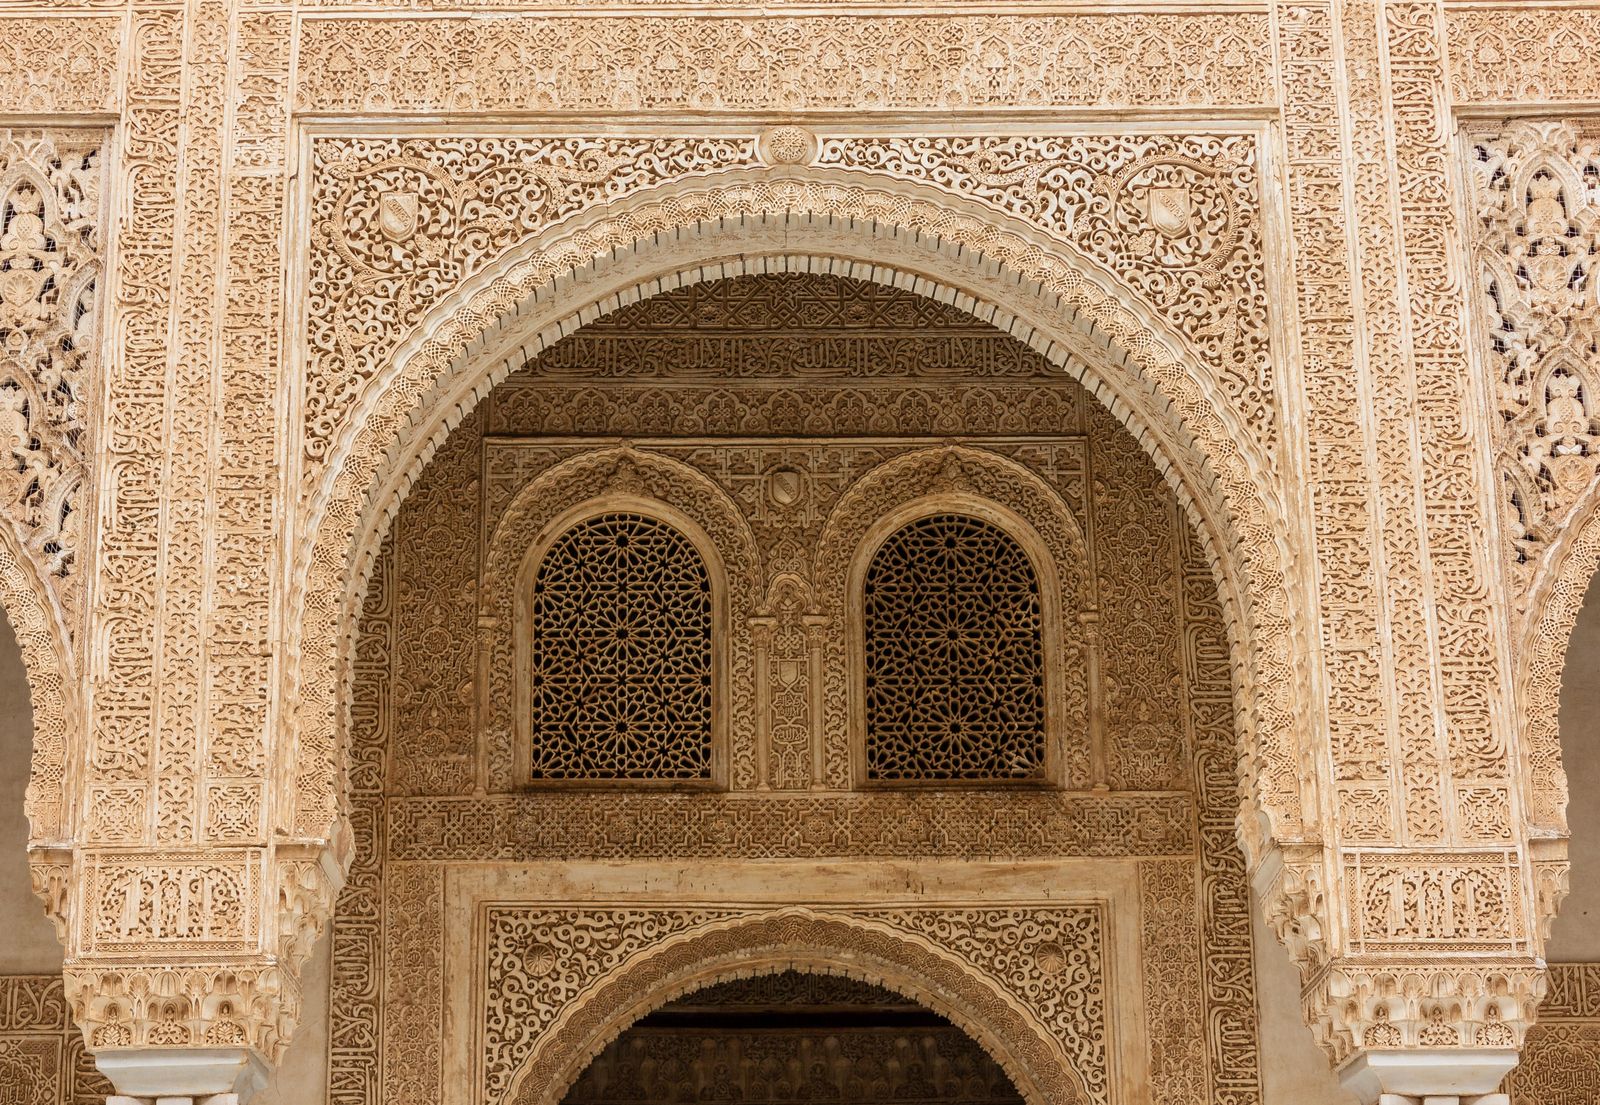 ARCHITECTURE ALHAMBRA PALACE